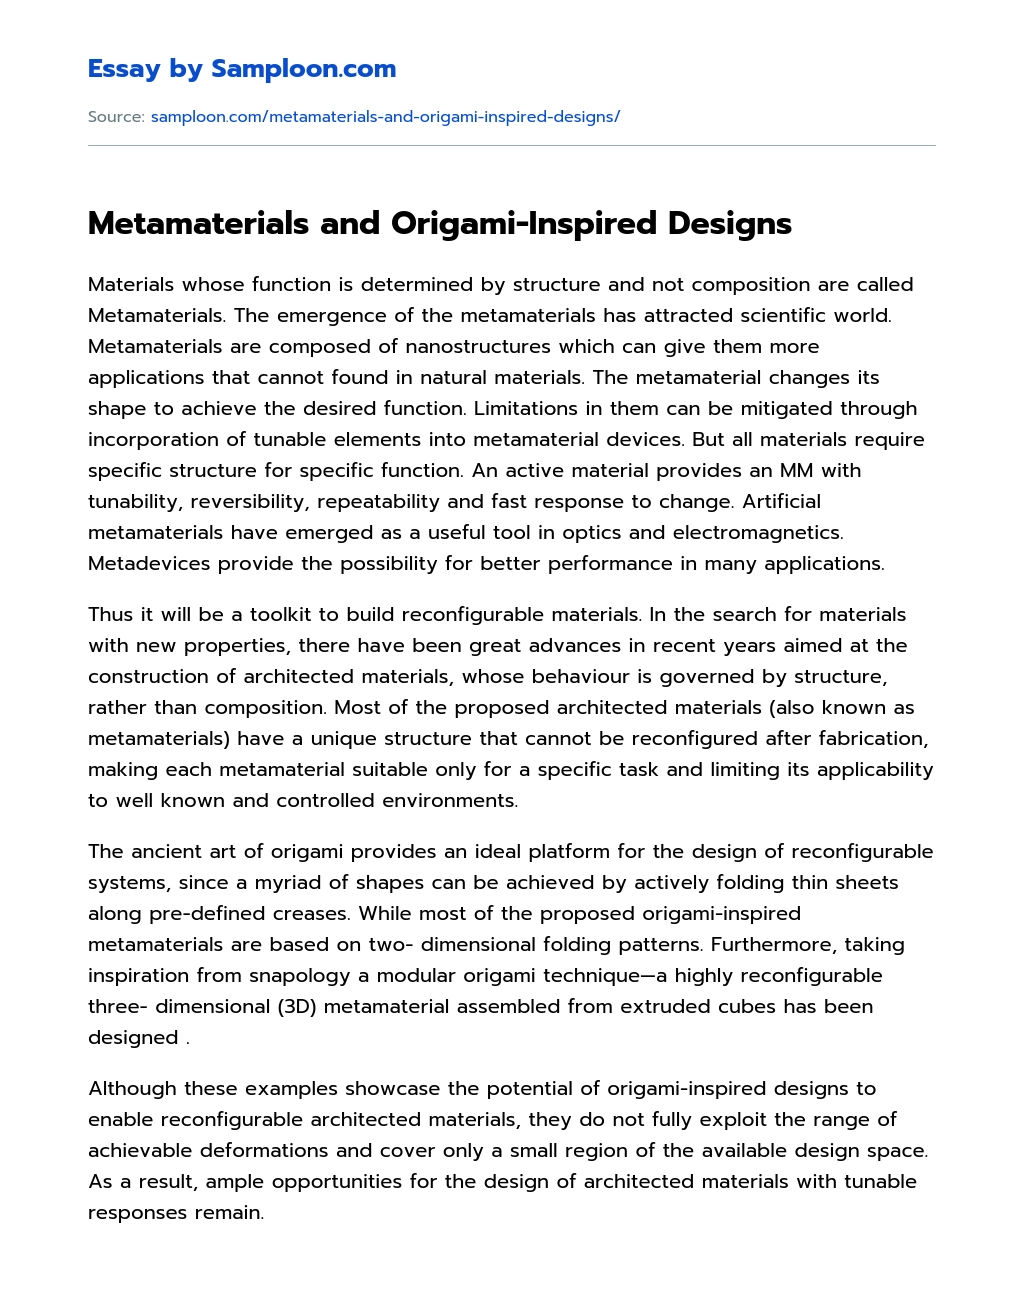 Metamaterials and Origami-Inspired Designs essay